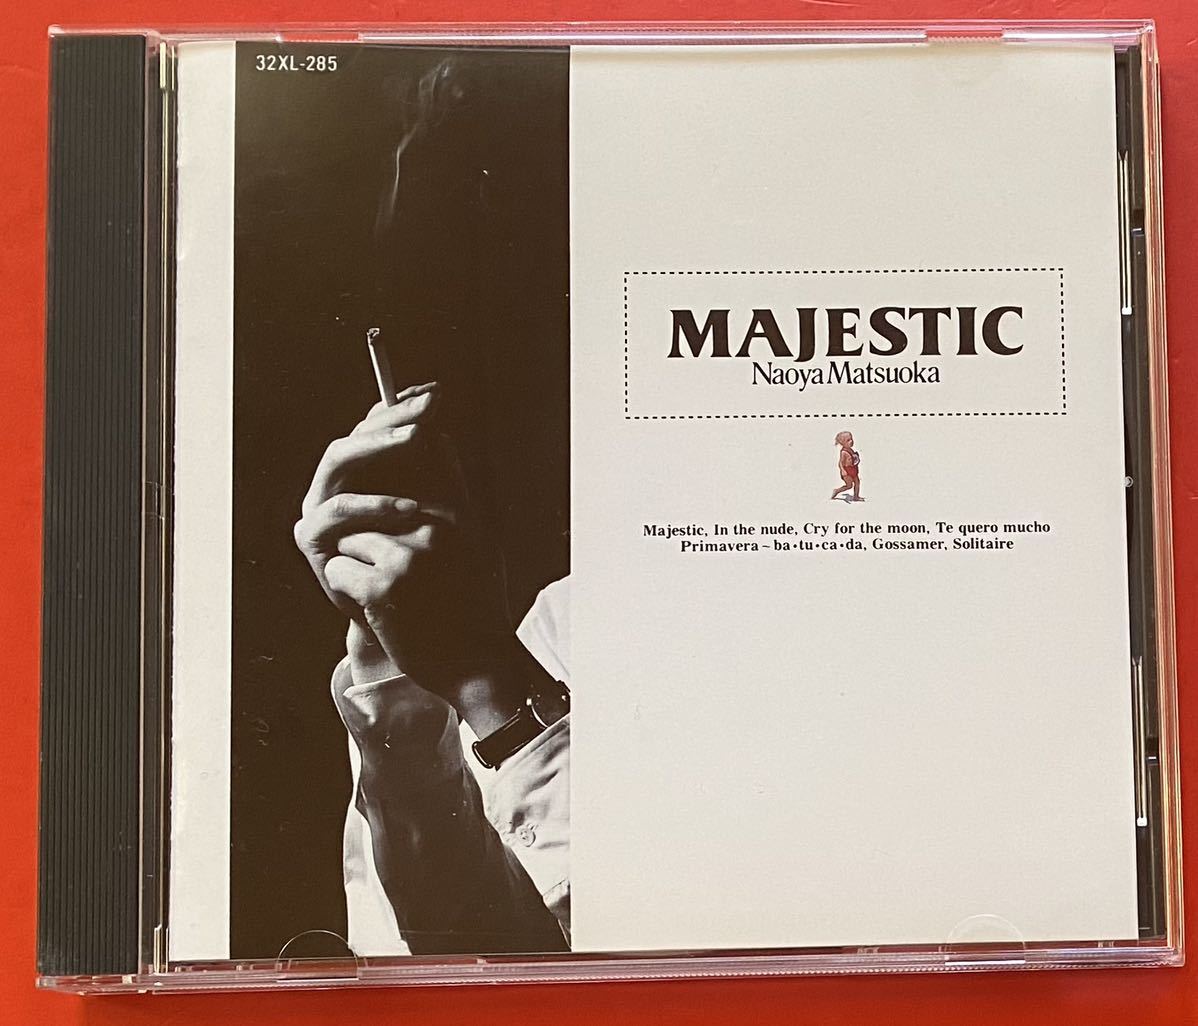 【CD】松岡直也「Majestic」NAOYA MATSUOKA [11170363]の画像1